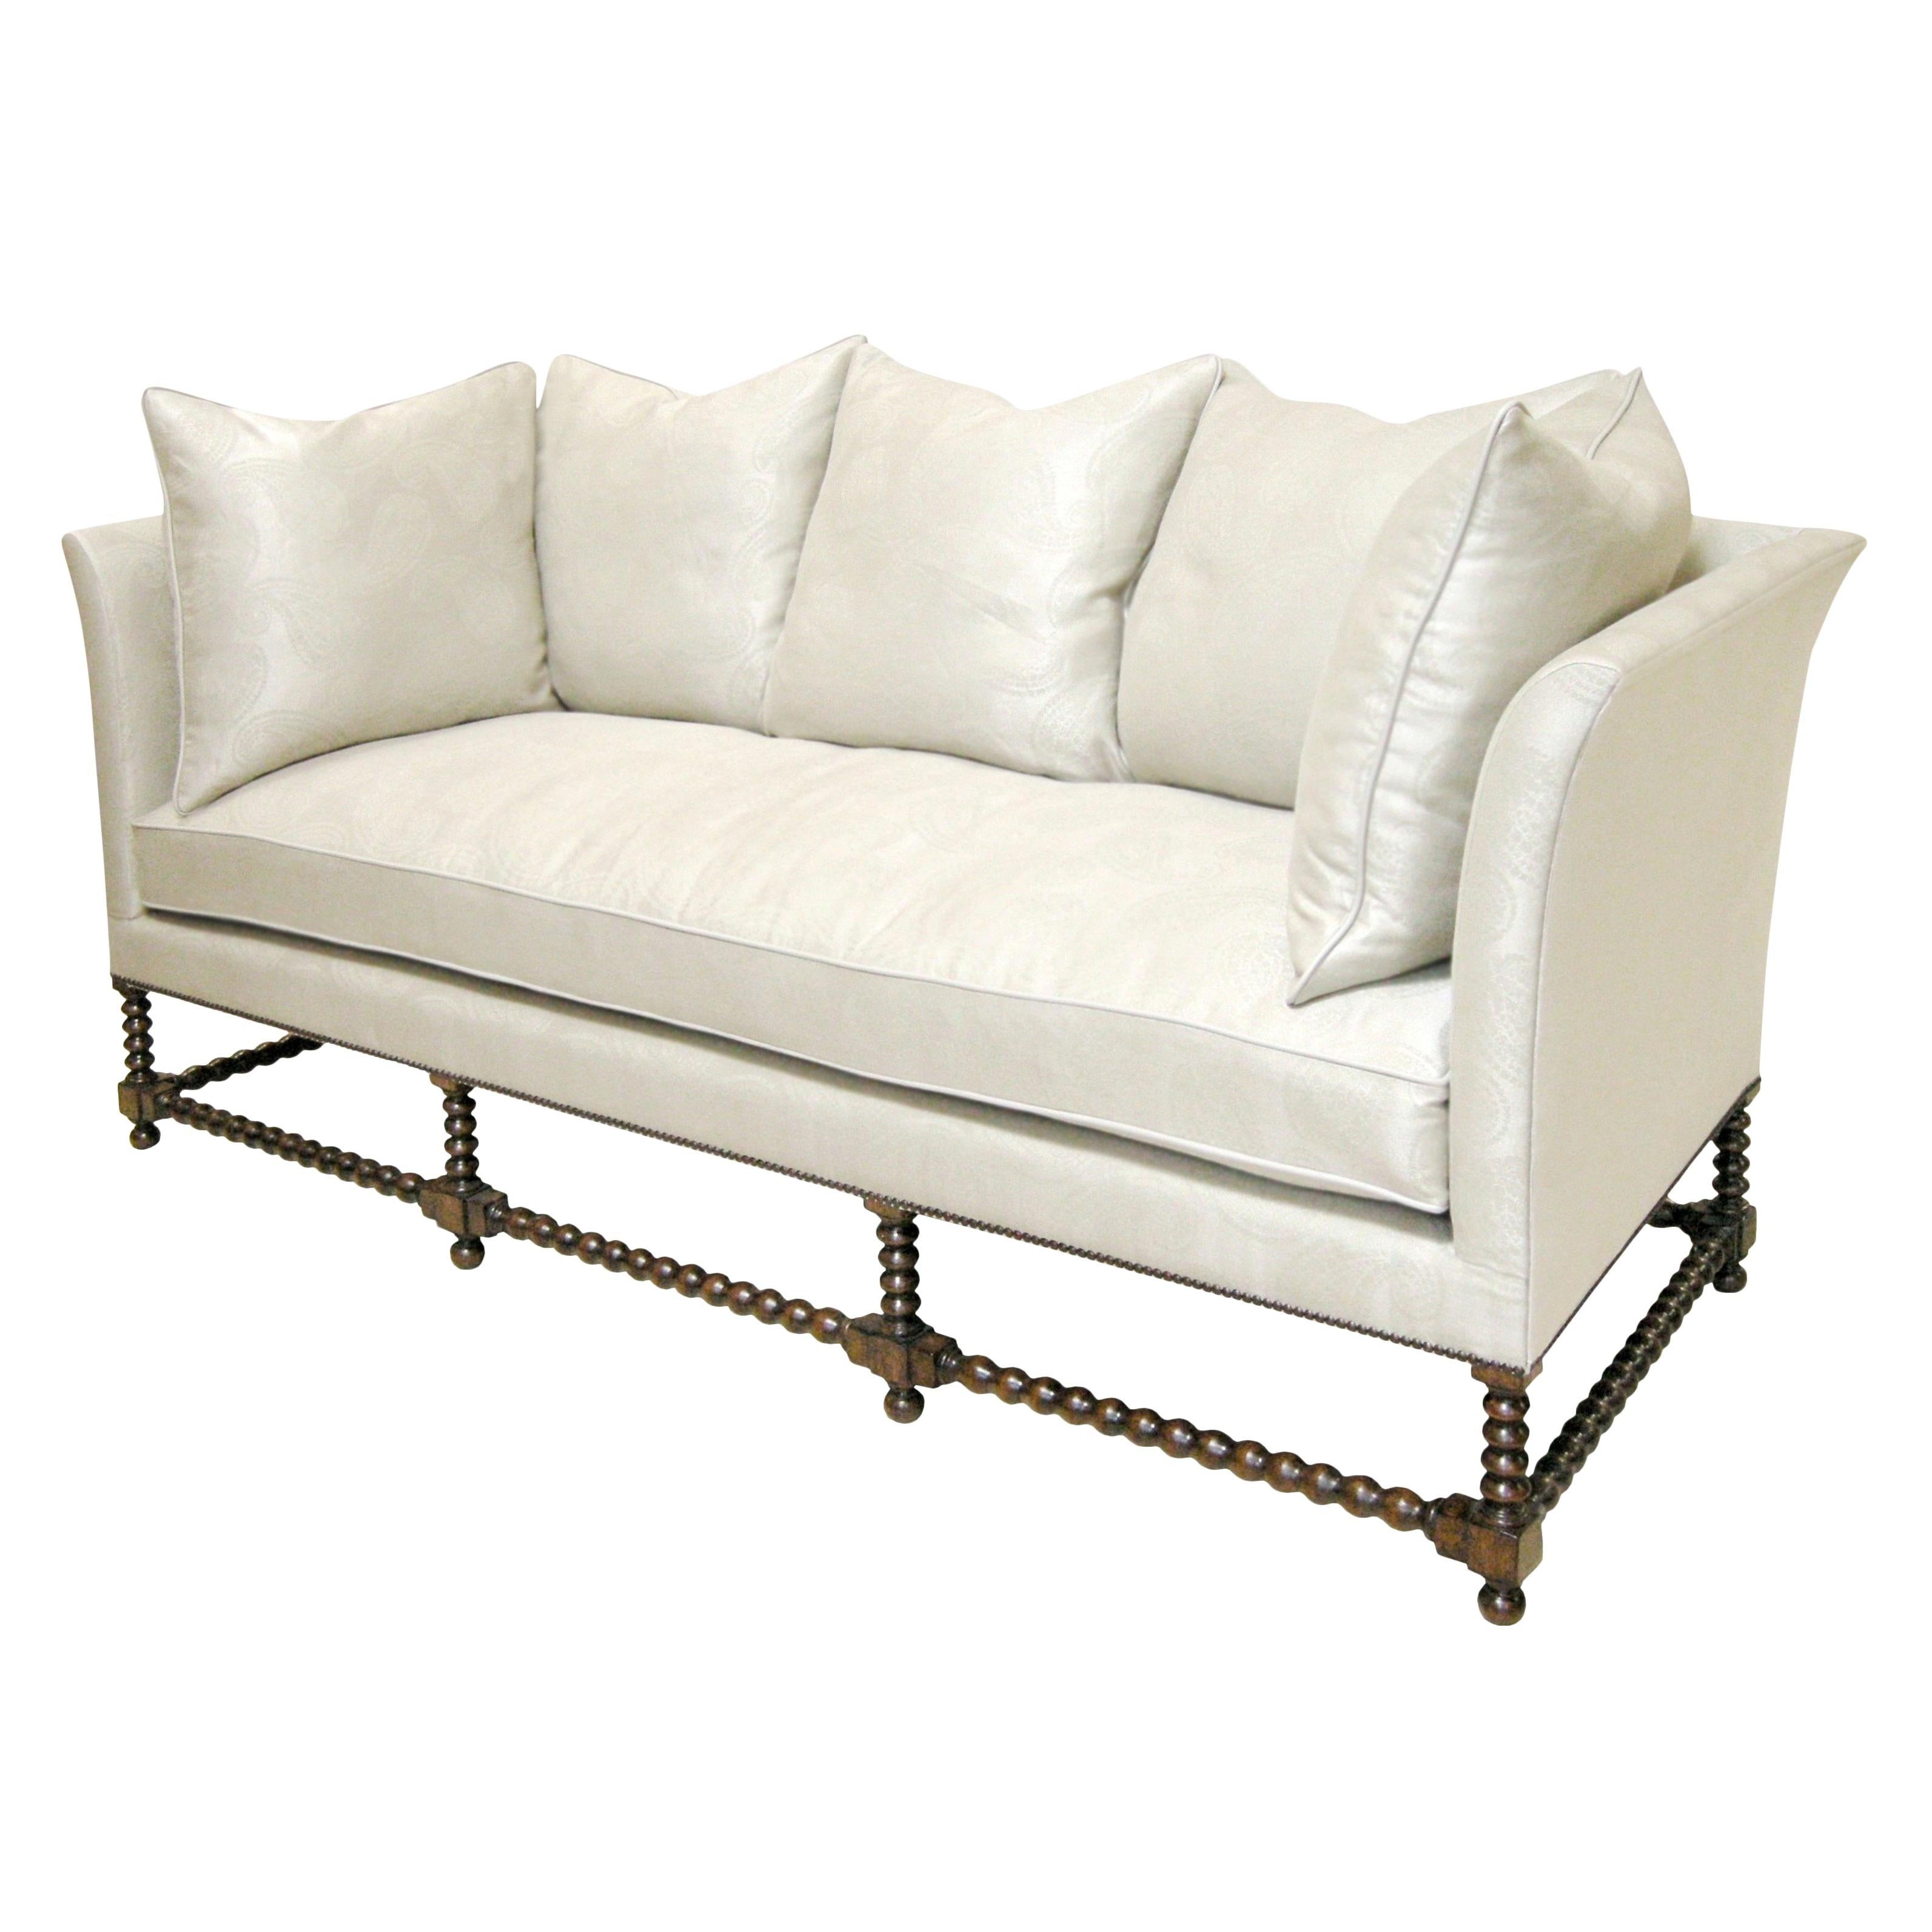 Spectacular designer sofa by Randy Esada designs for Prospr.

Made to order.

Item #: 9028 - Torino sofa
Finish: Distressed medium walnut
C.O.M./C.O.L.: C.O.M. = 20 Yards Plain - Railroaded & Self-Trim
C.O.L. = 230 square feet - approx. 5